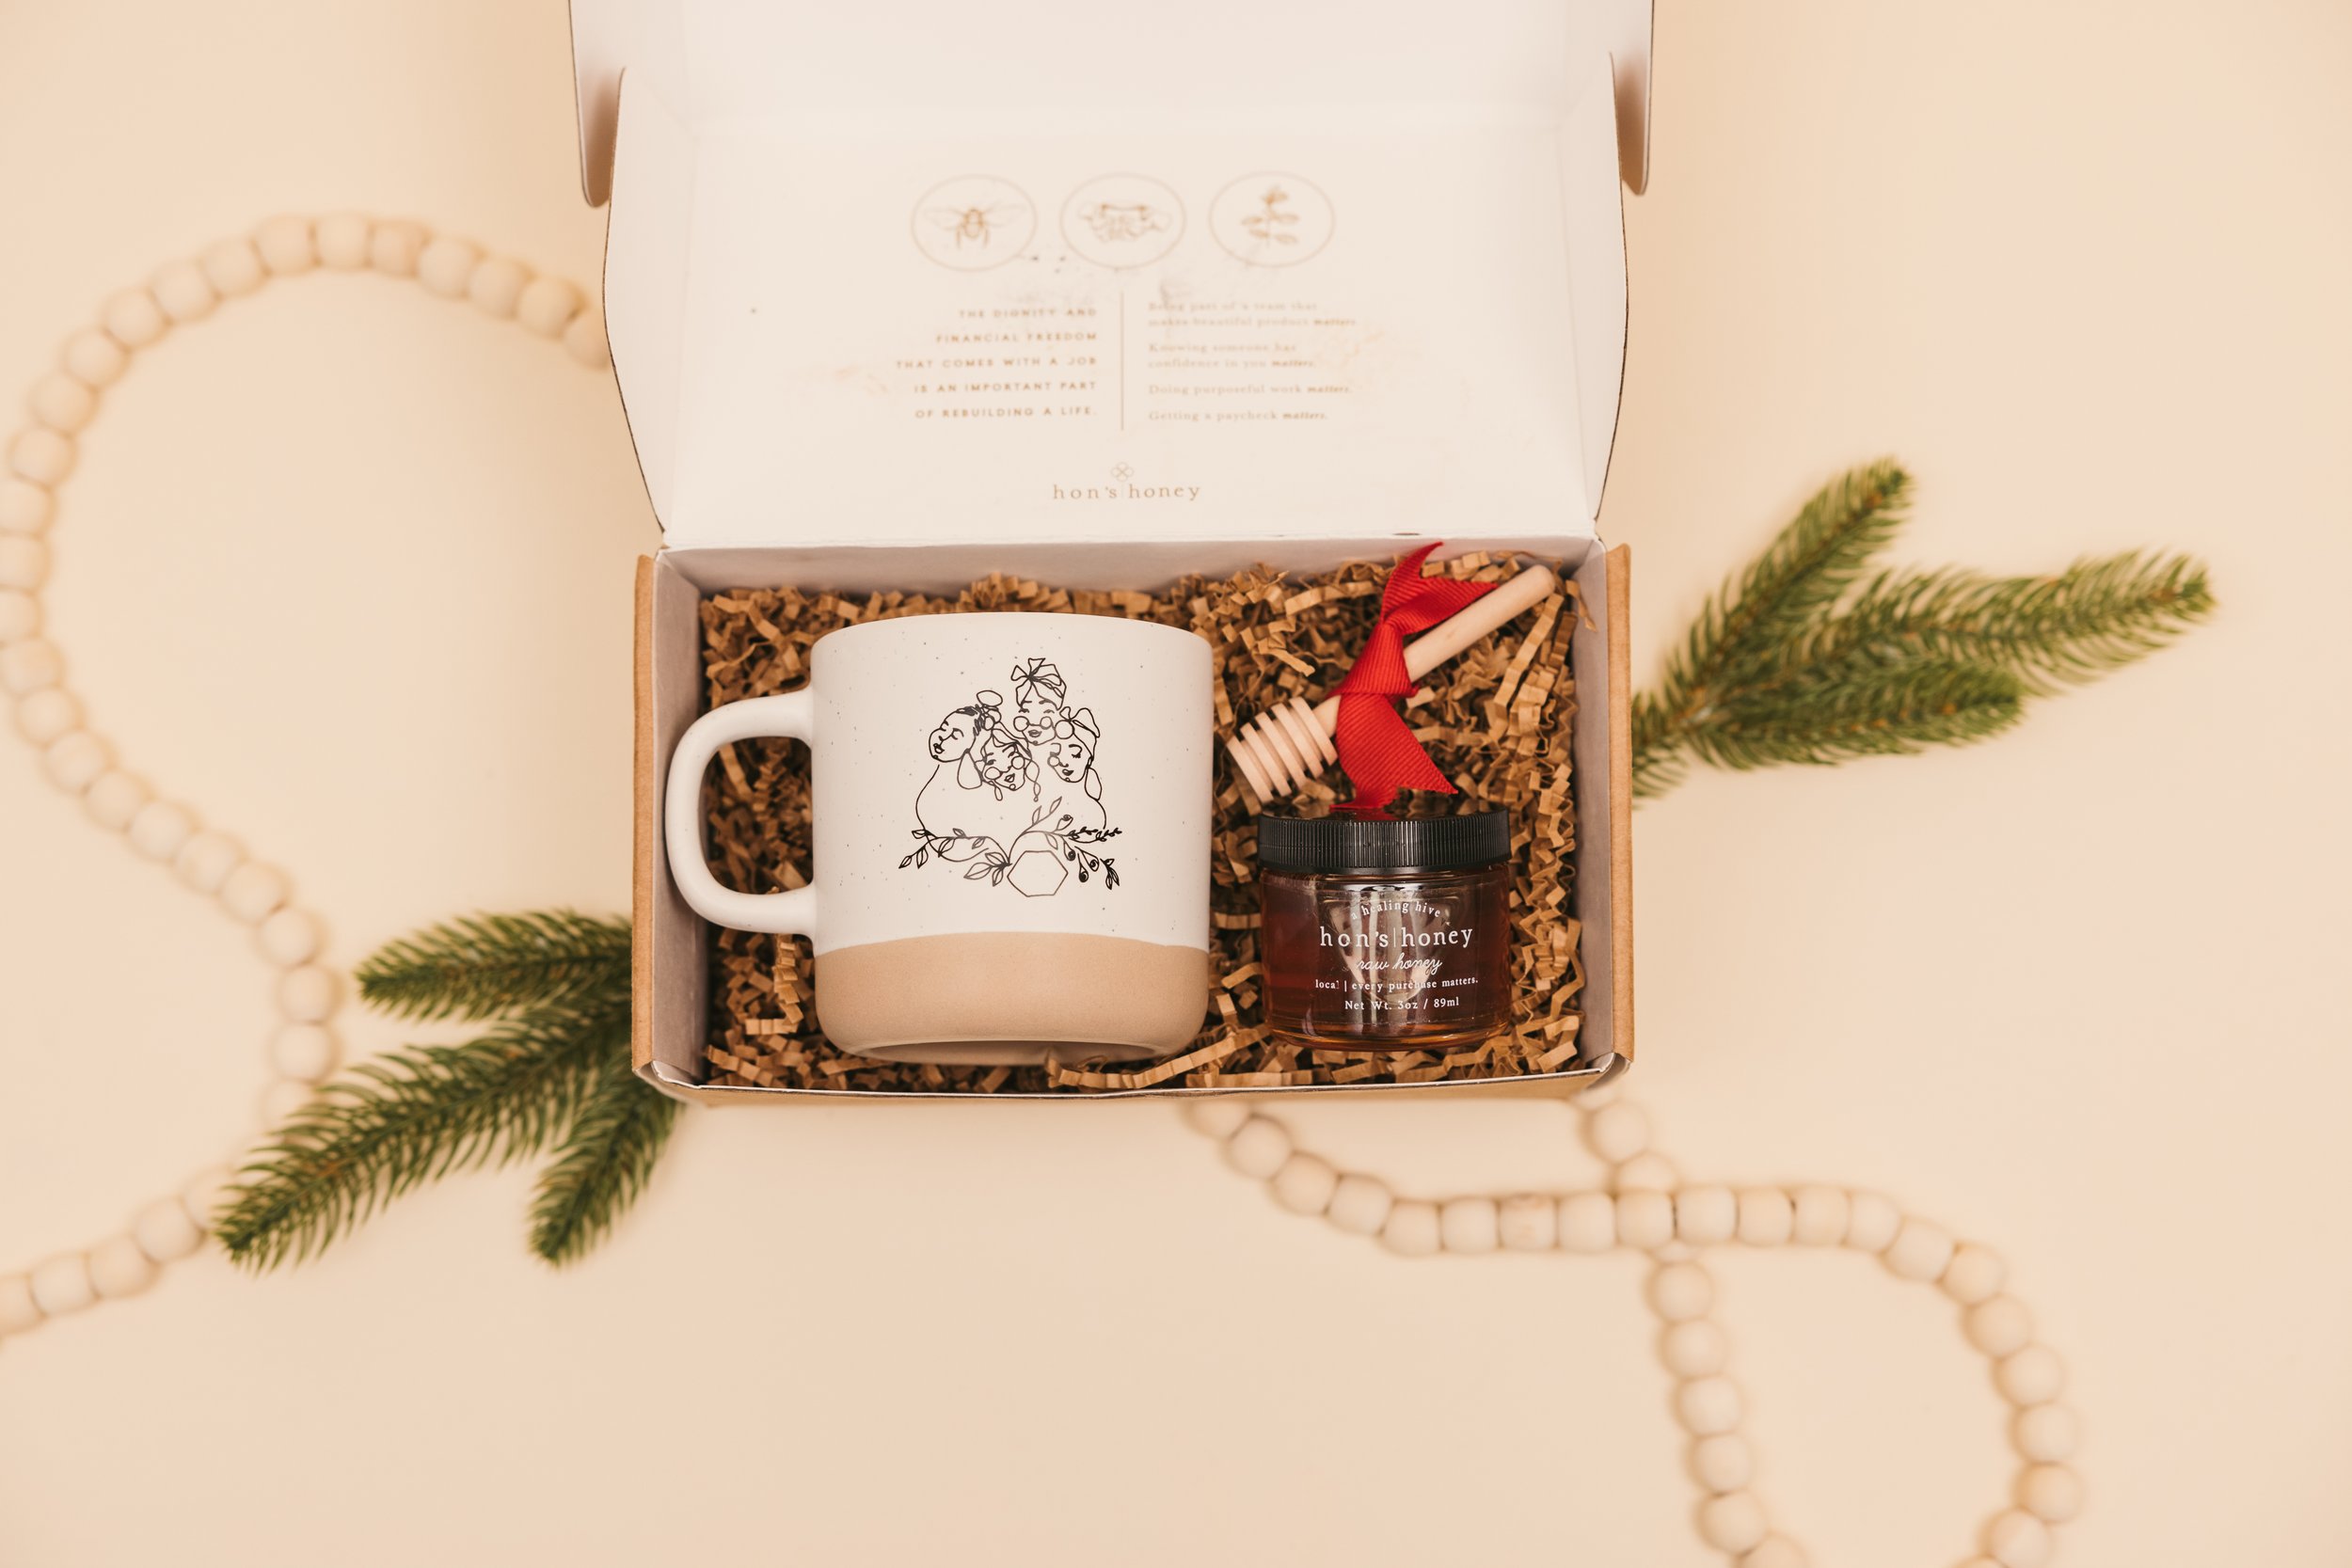 Mug and Honey Gift Box - $25.00